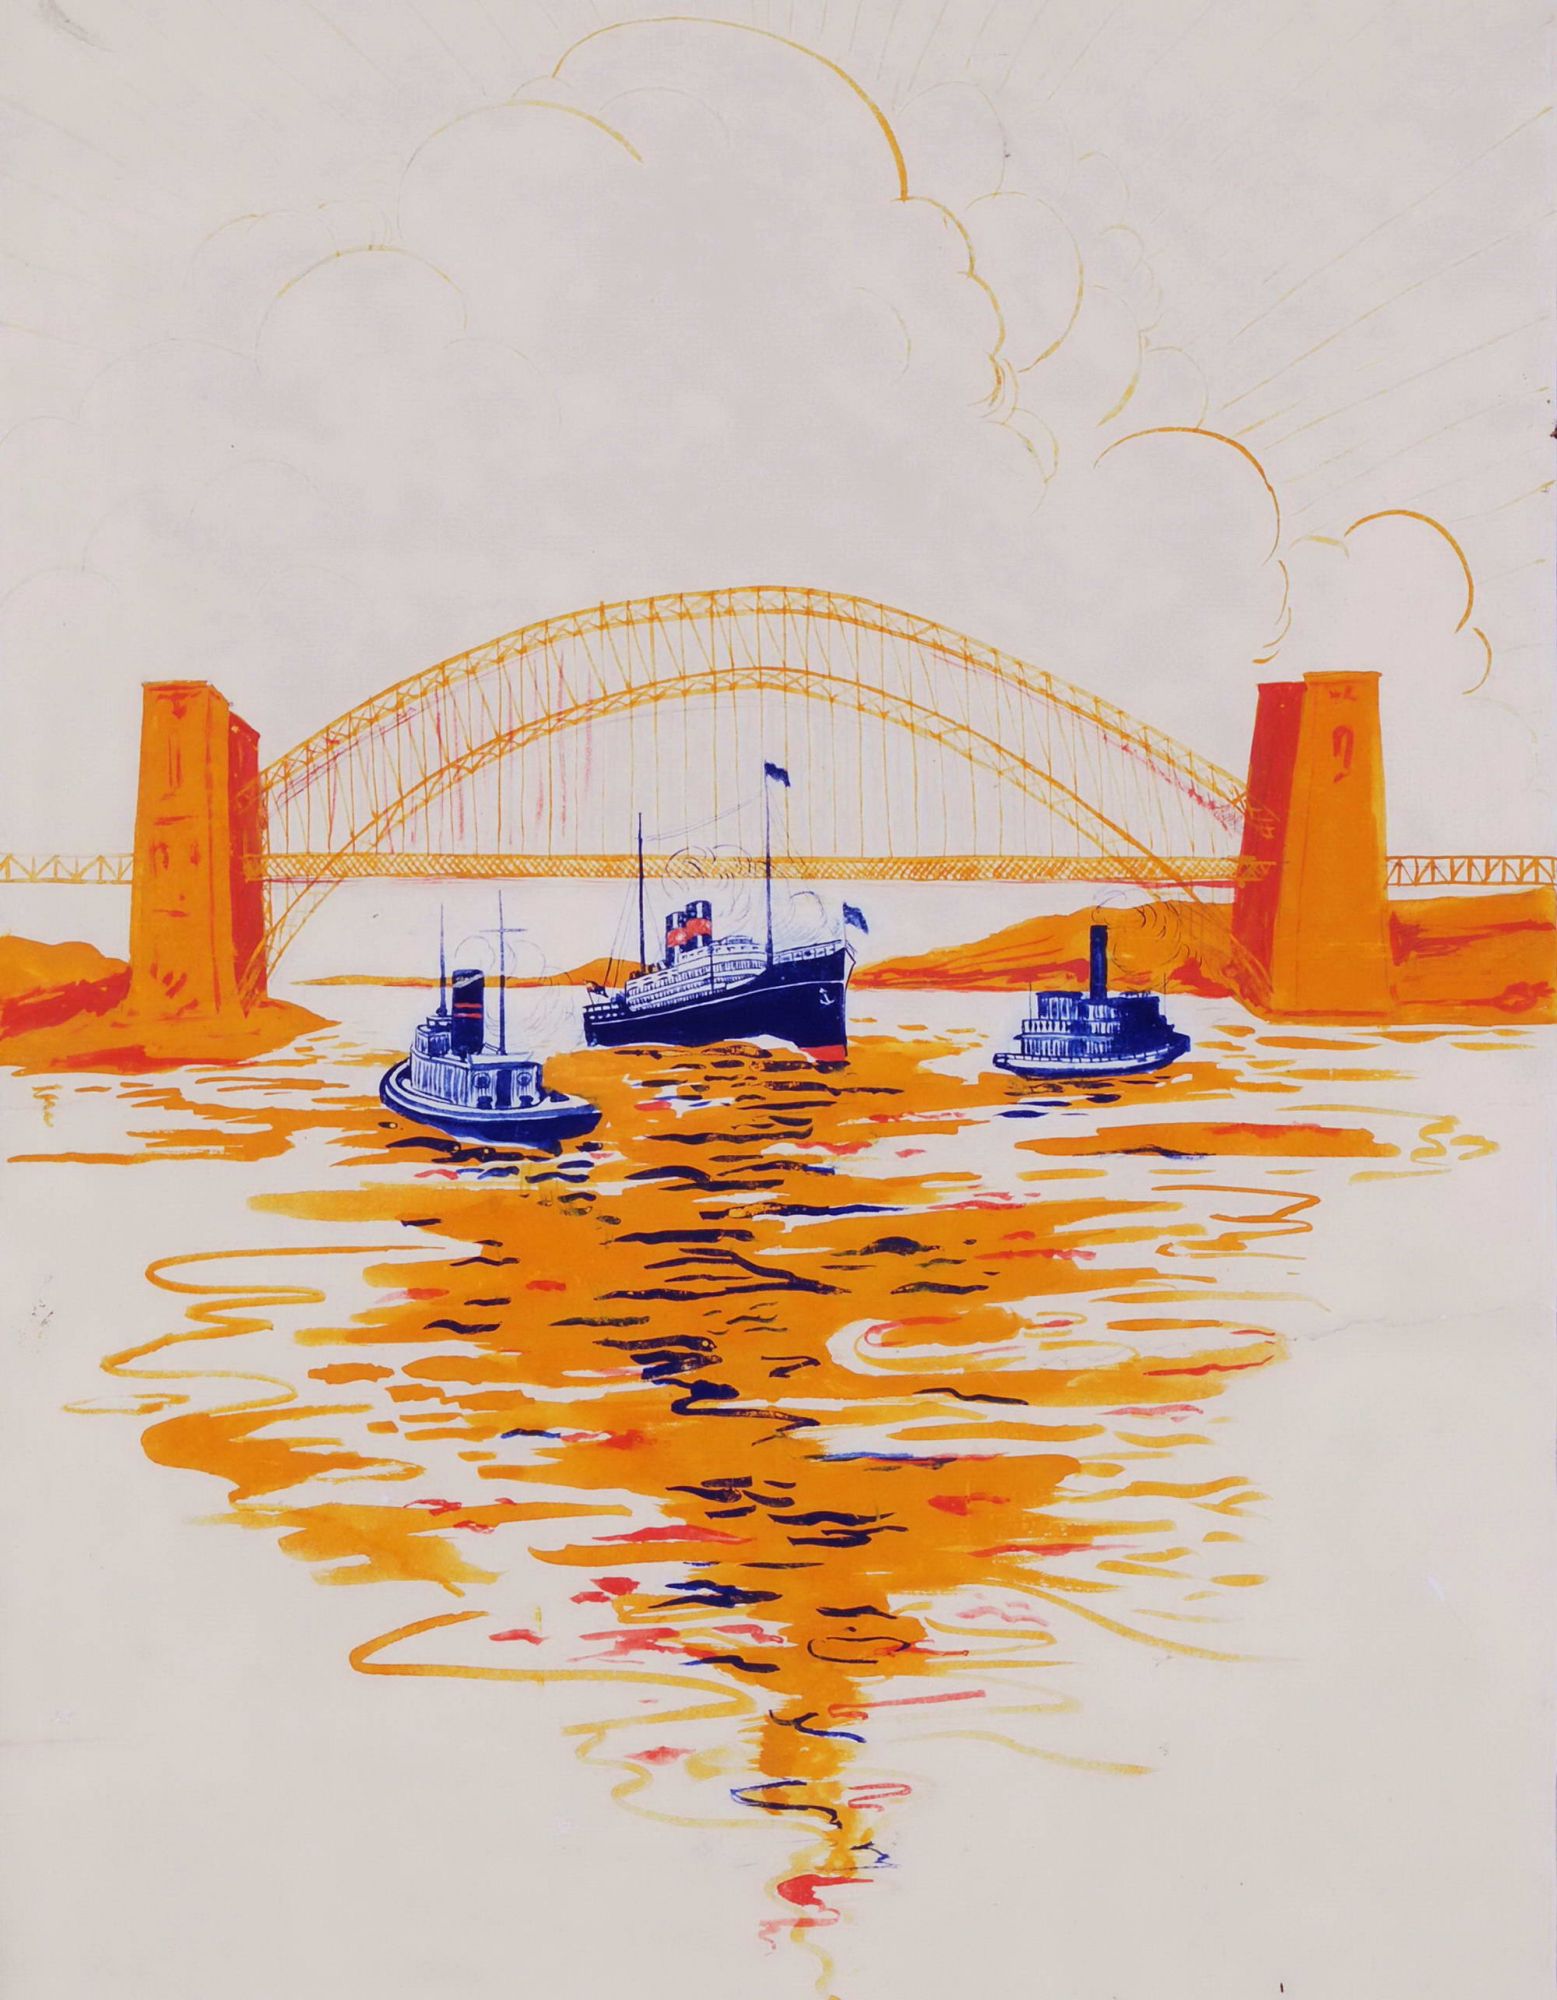 Sydney Harbour Bridge Pencil Sketch by Kaye Menner | Flickr